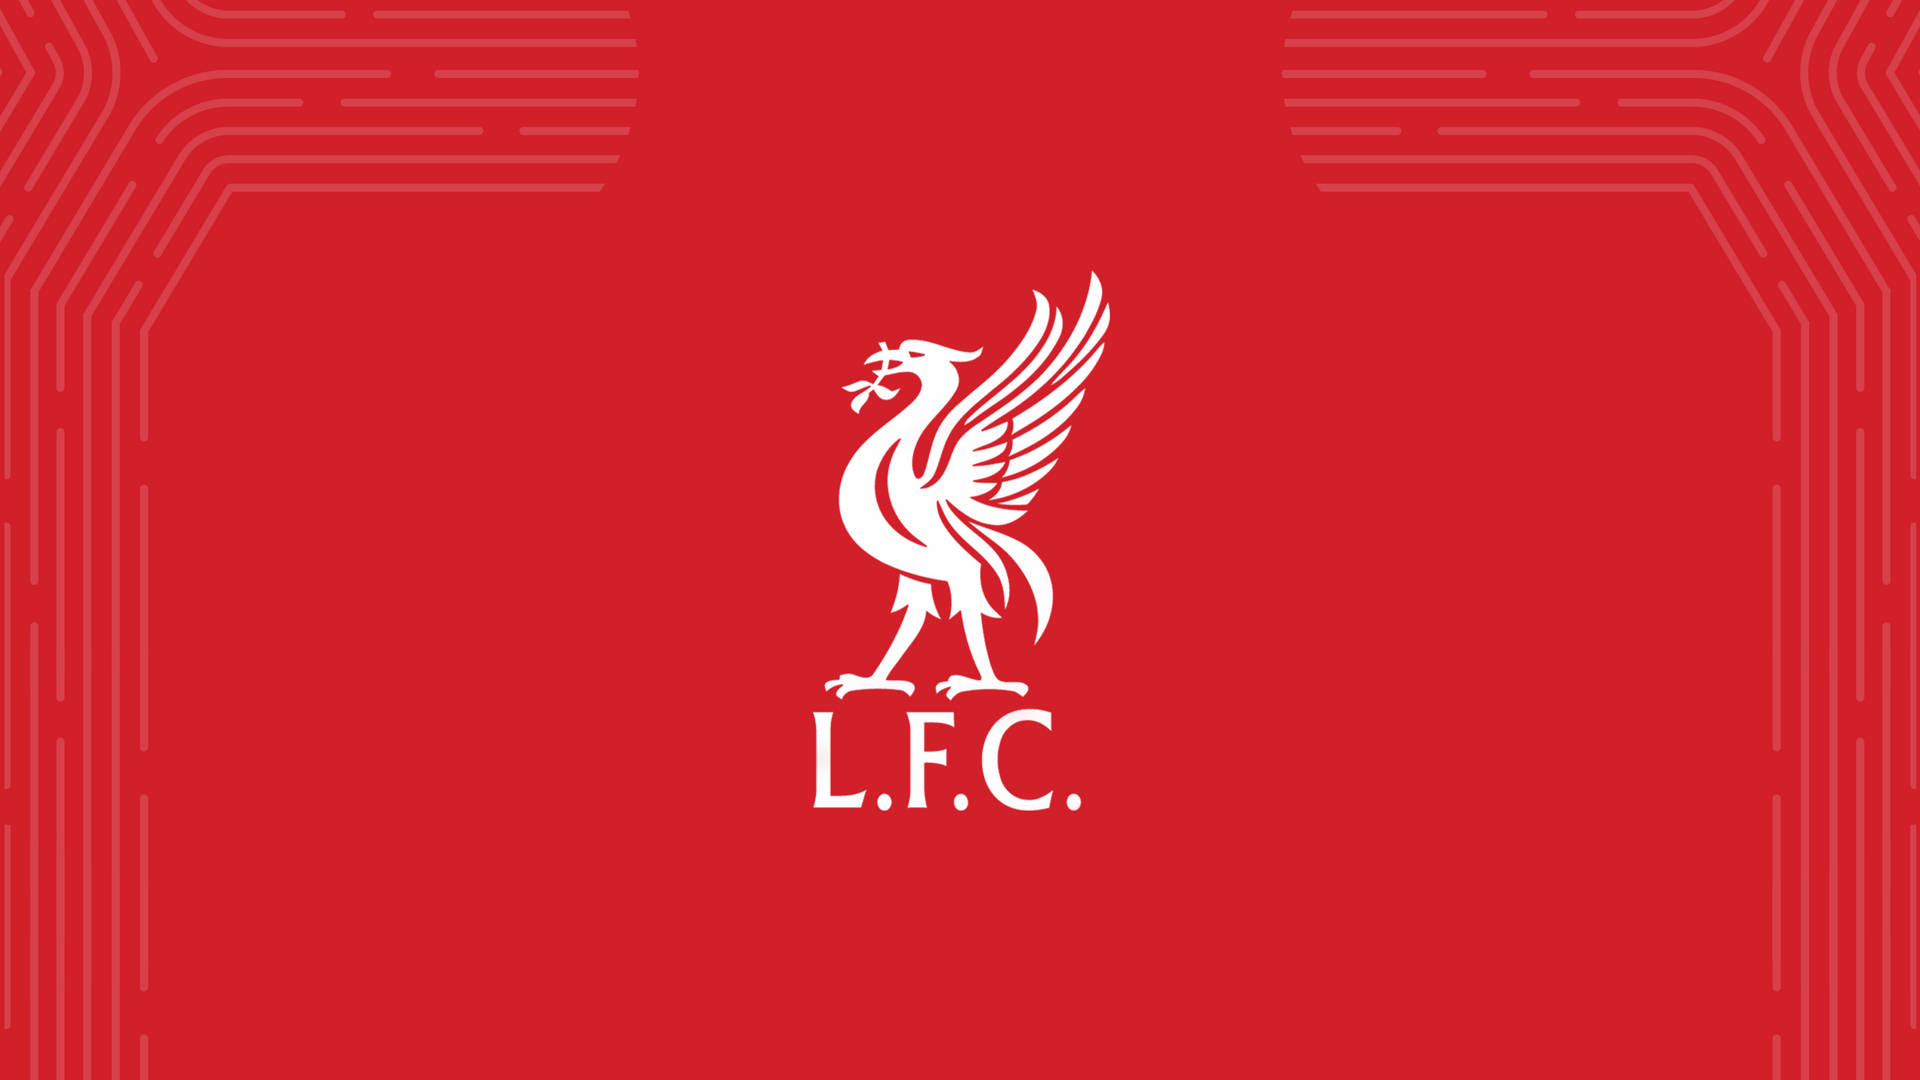 Liverpoolf.c. L.f.c. (spanish Translation: Liverpool F.c. L.f.c.) Fondo de pantalla